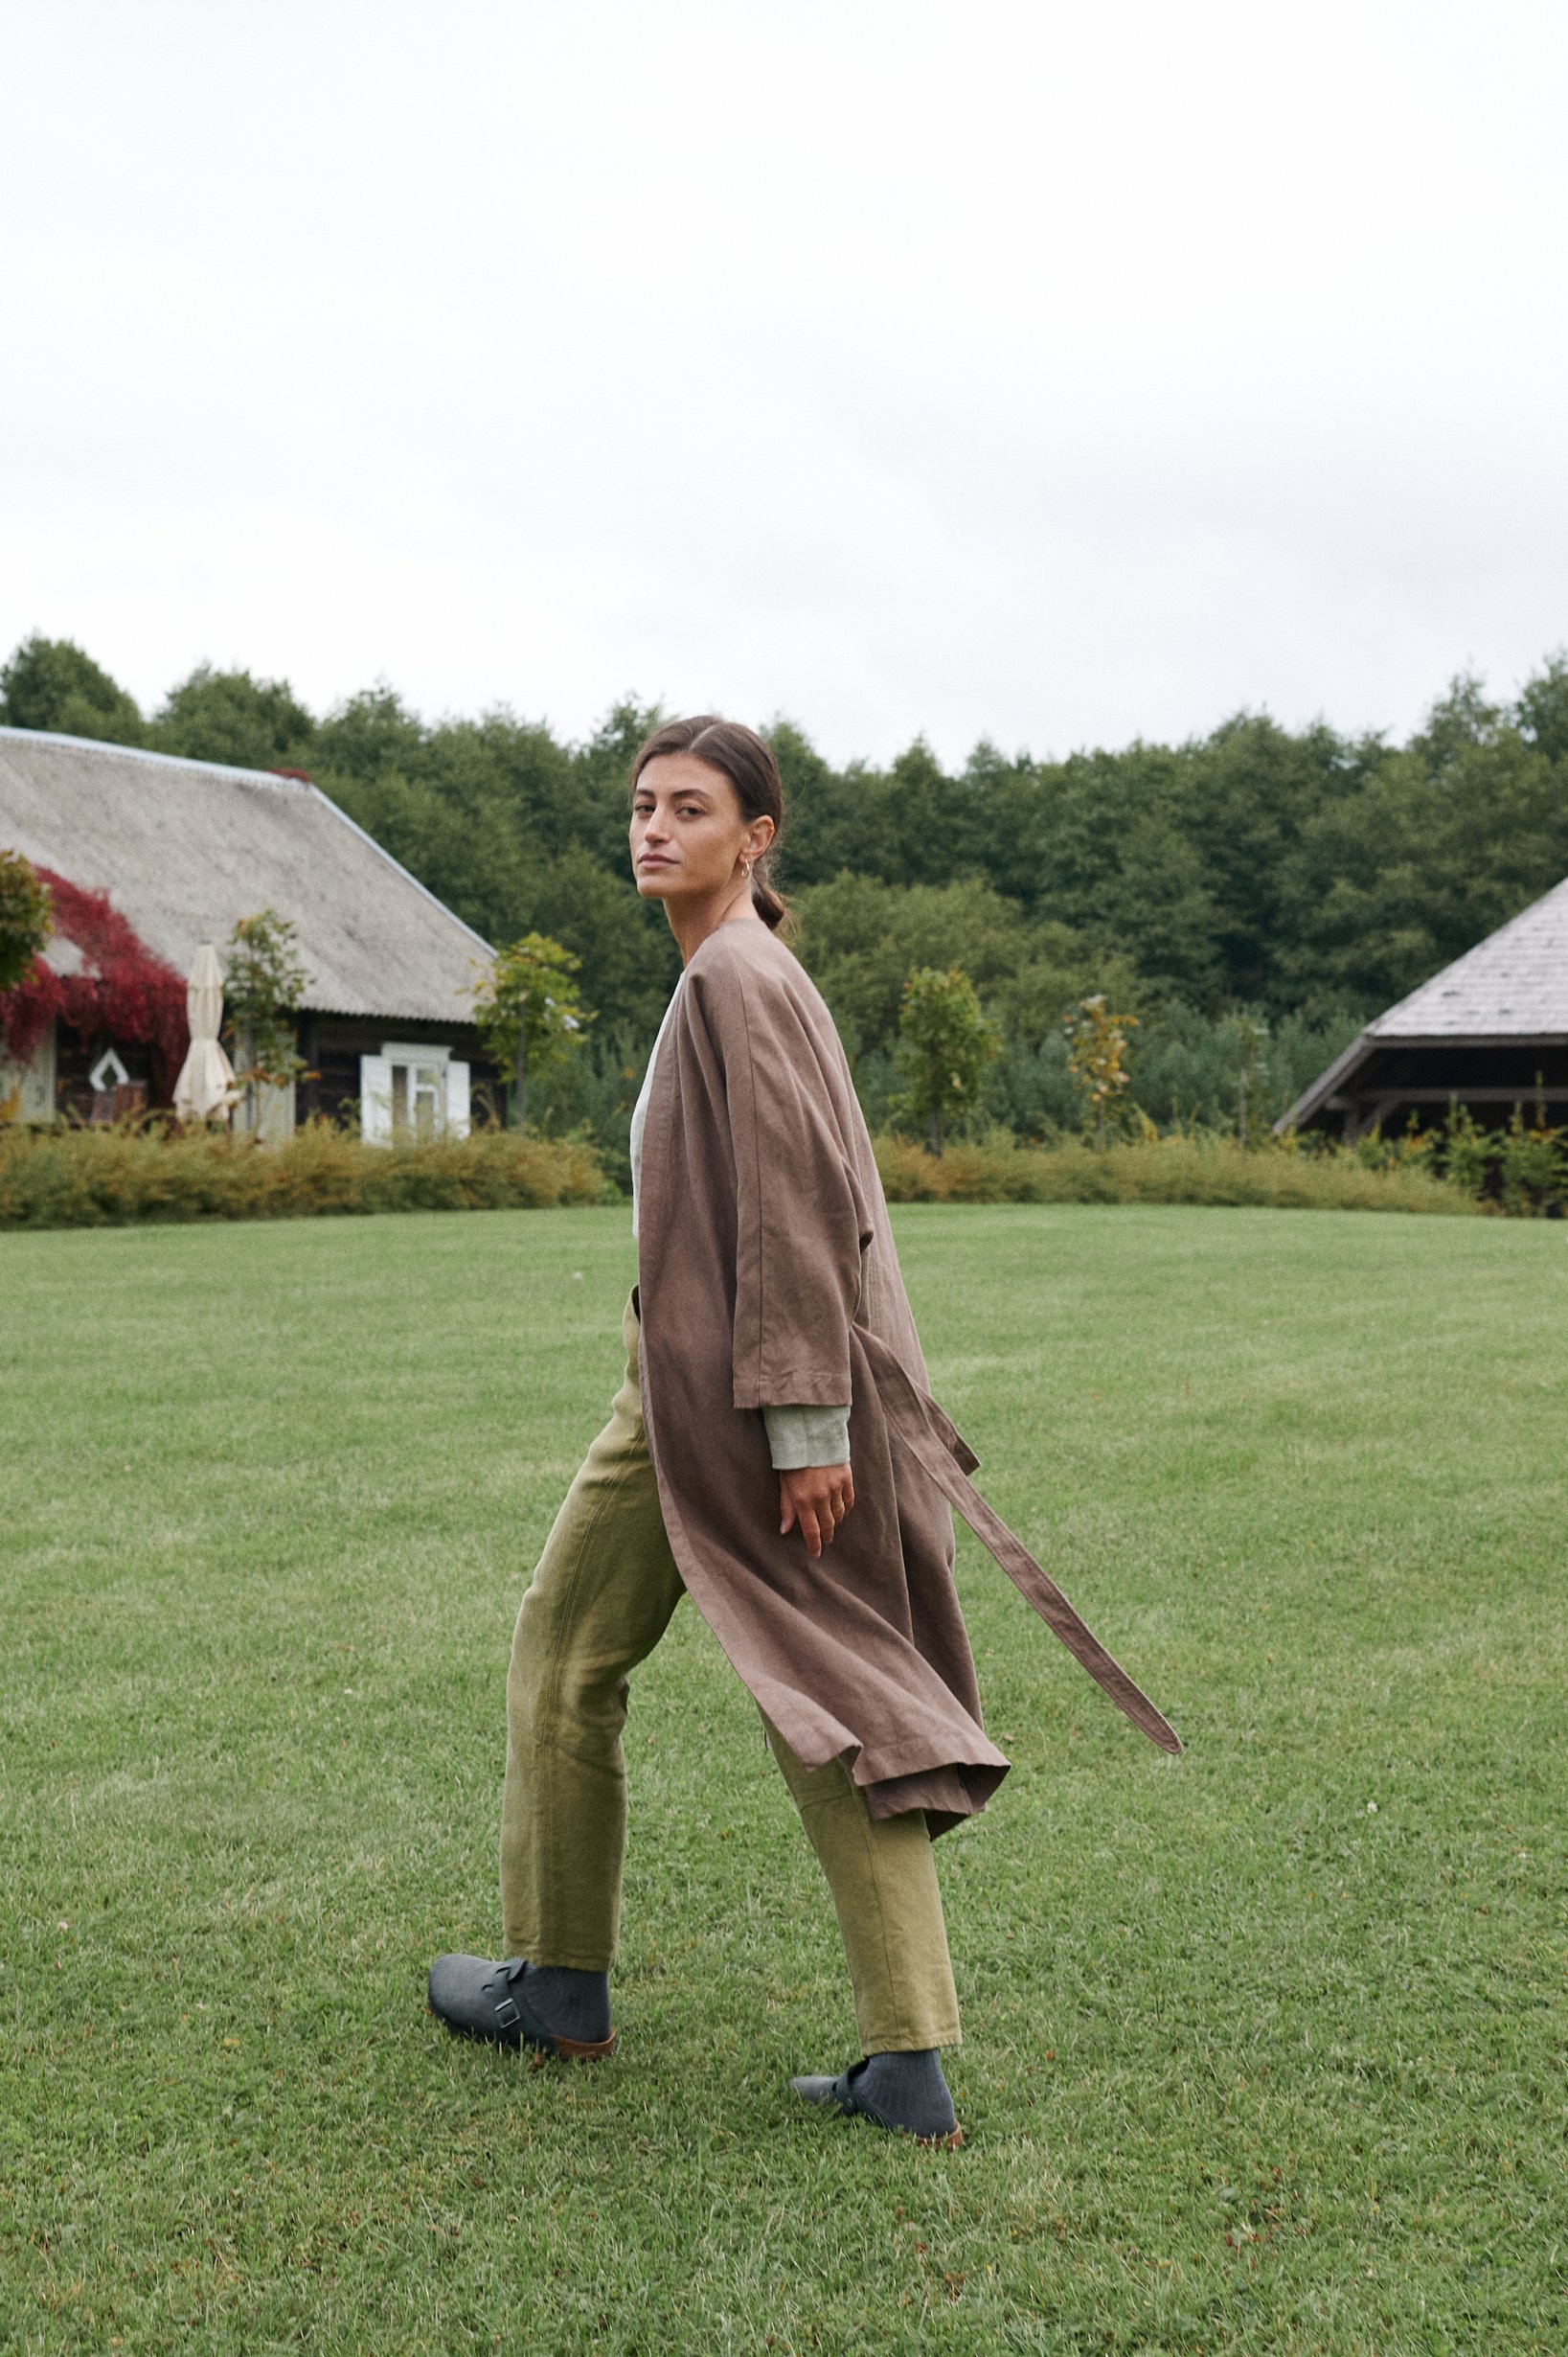 A model wearing a long brown linen jacket that's flowing as she's walking